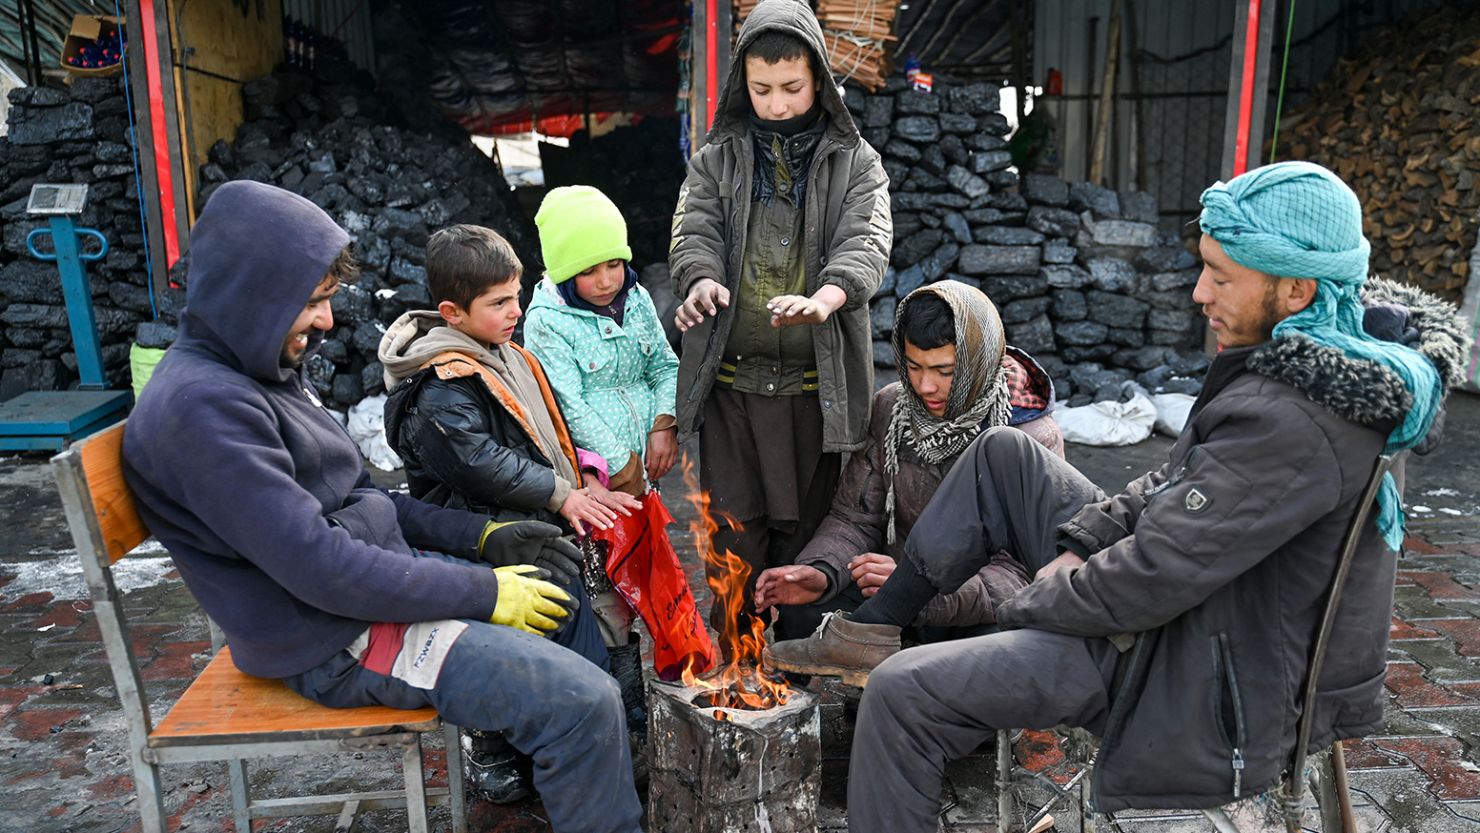 January Afghan